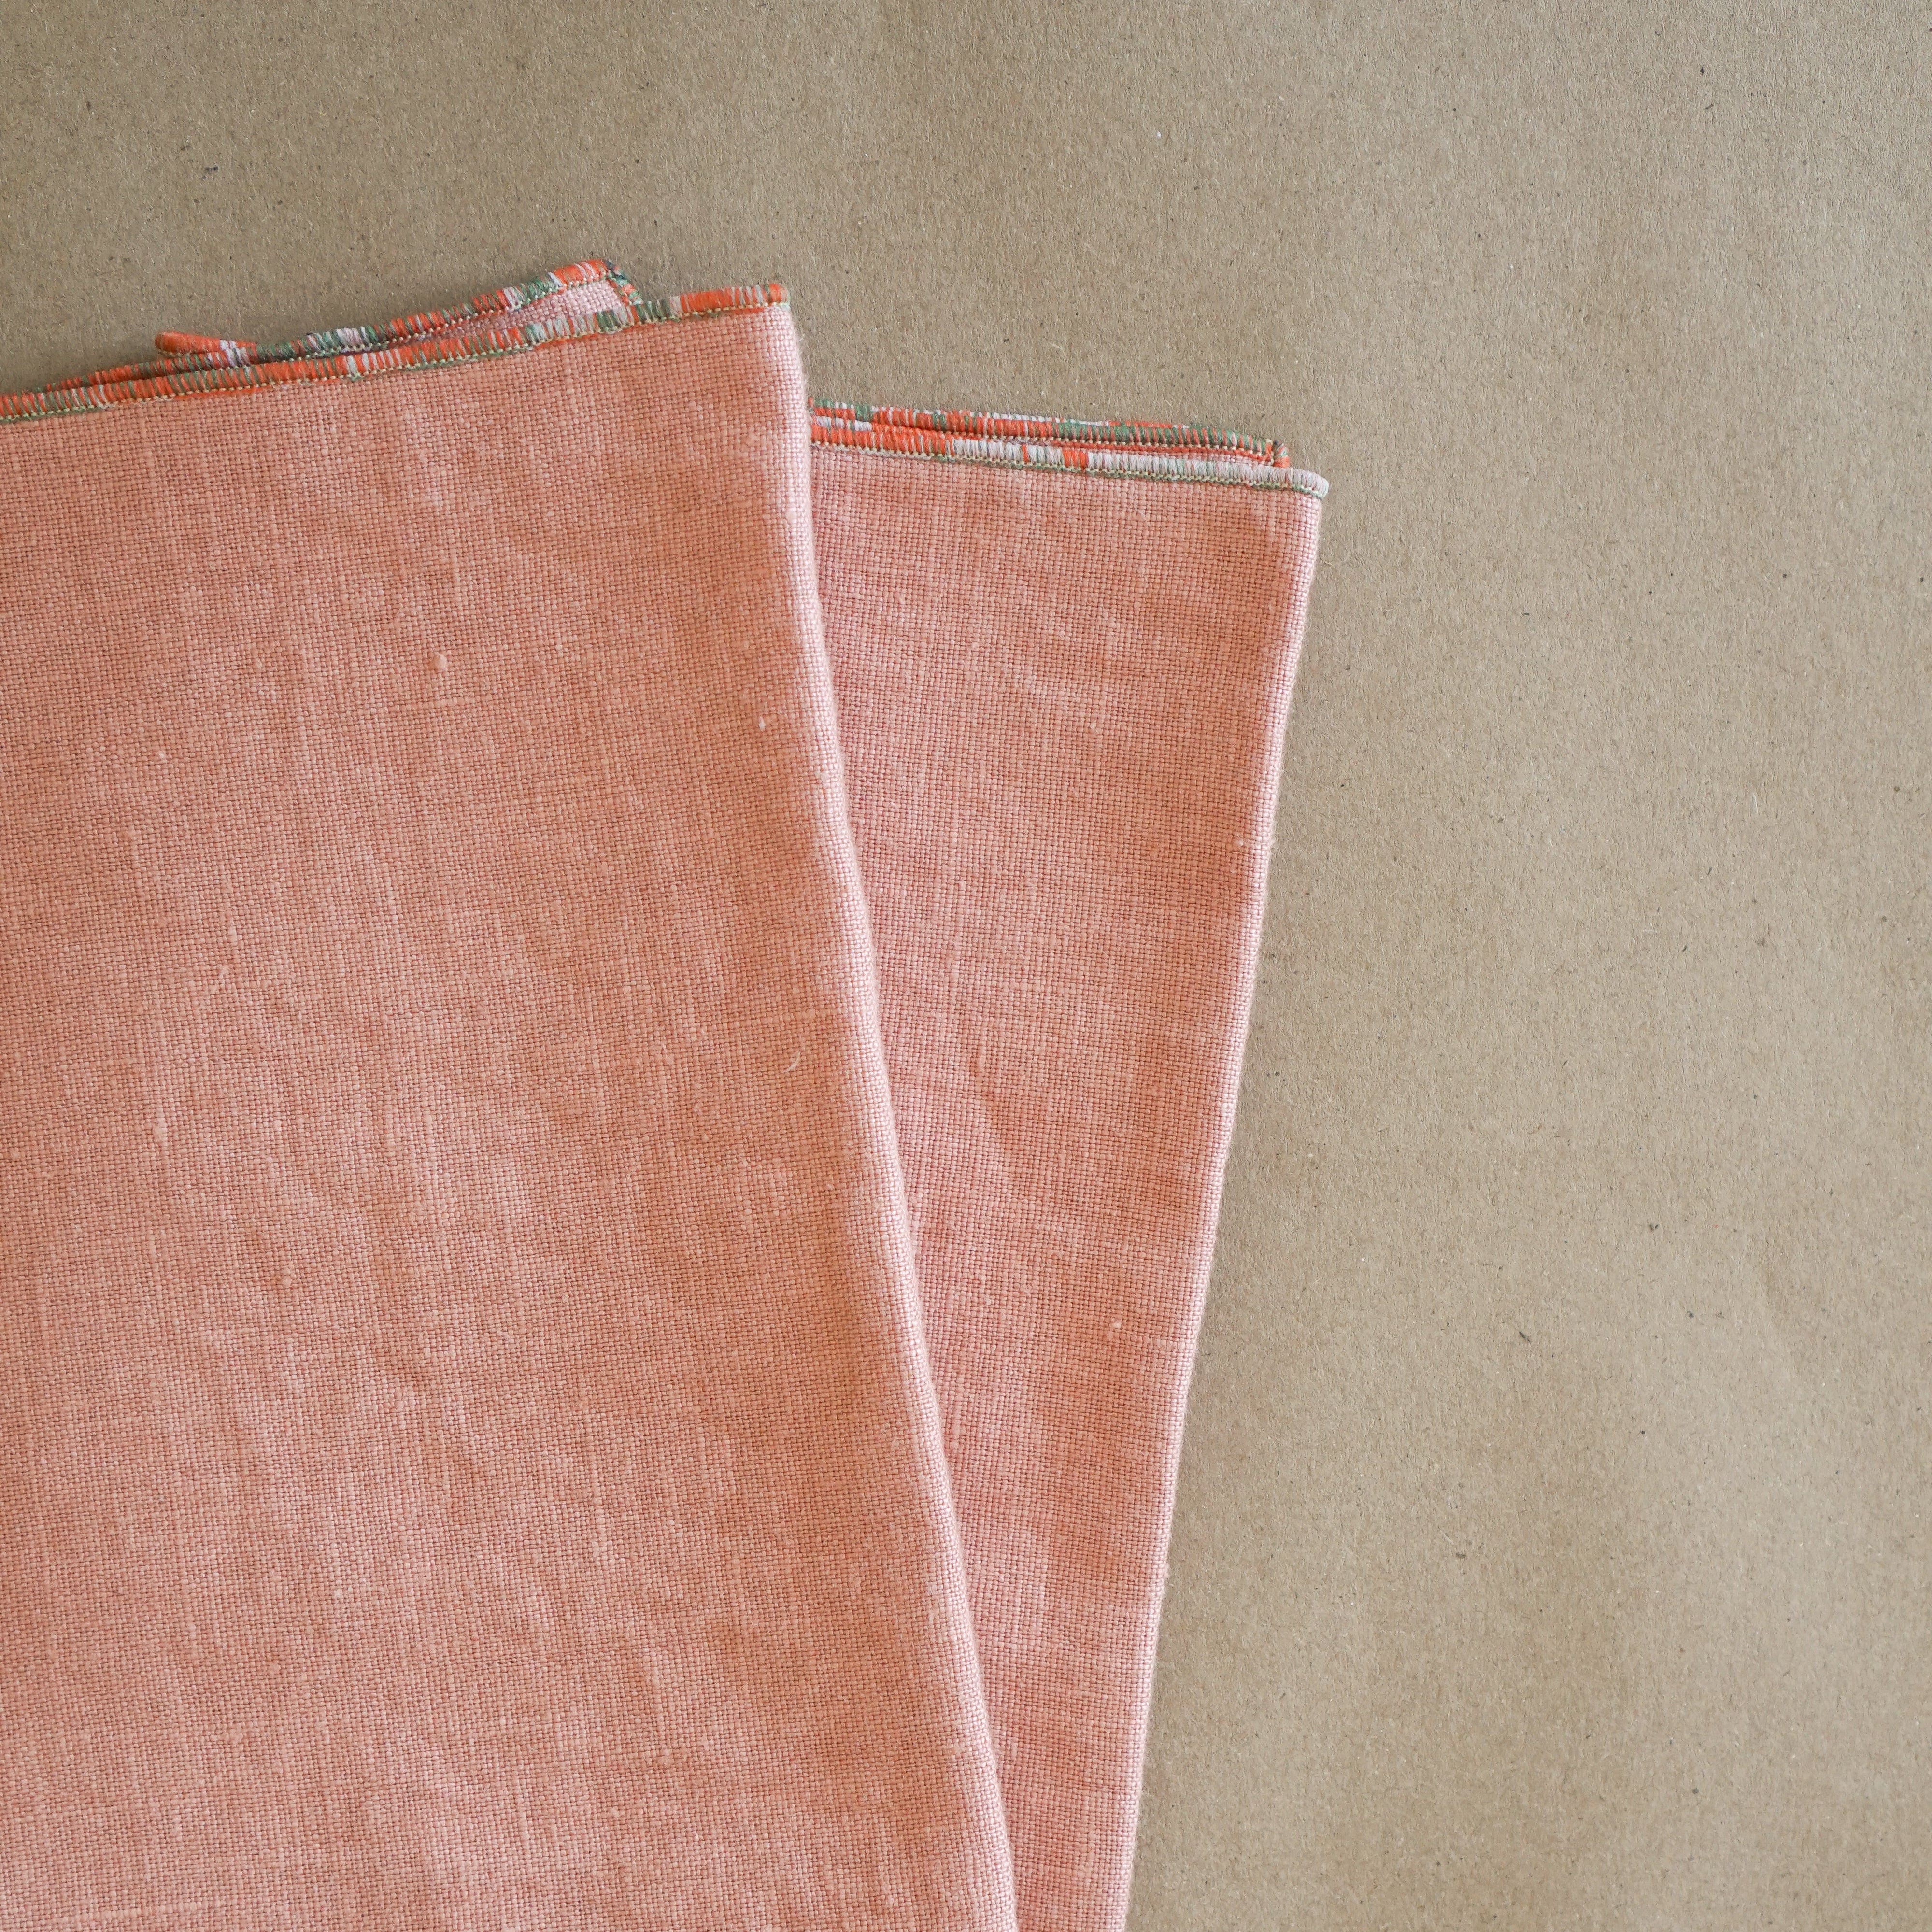 Atelier Saucier Cloth Napkins Desert Rose Pink Linen Napkins